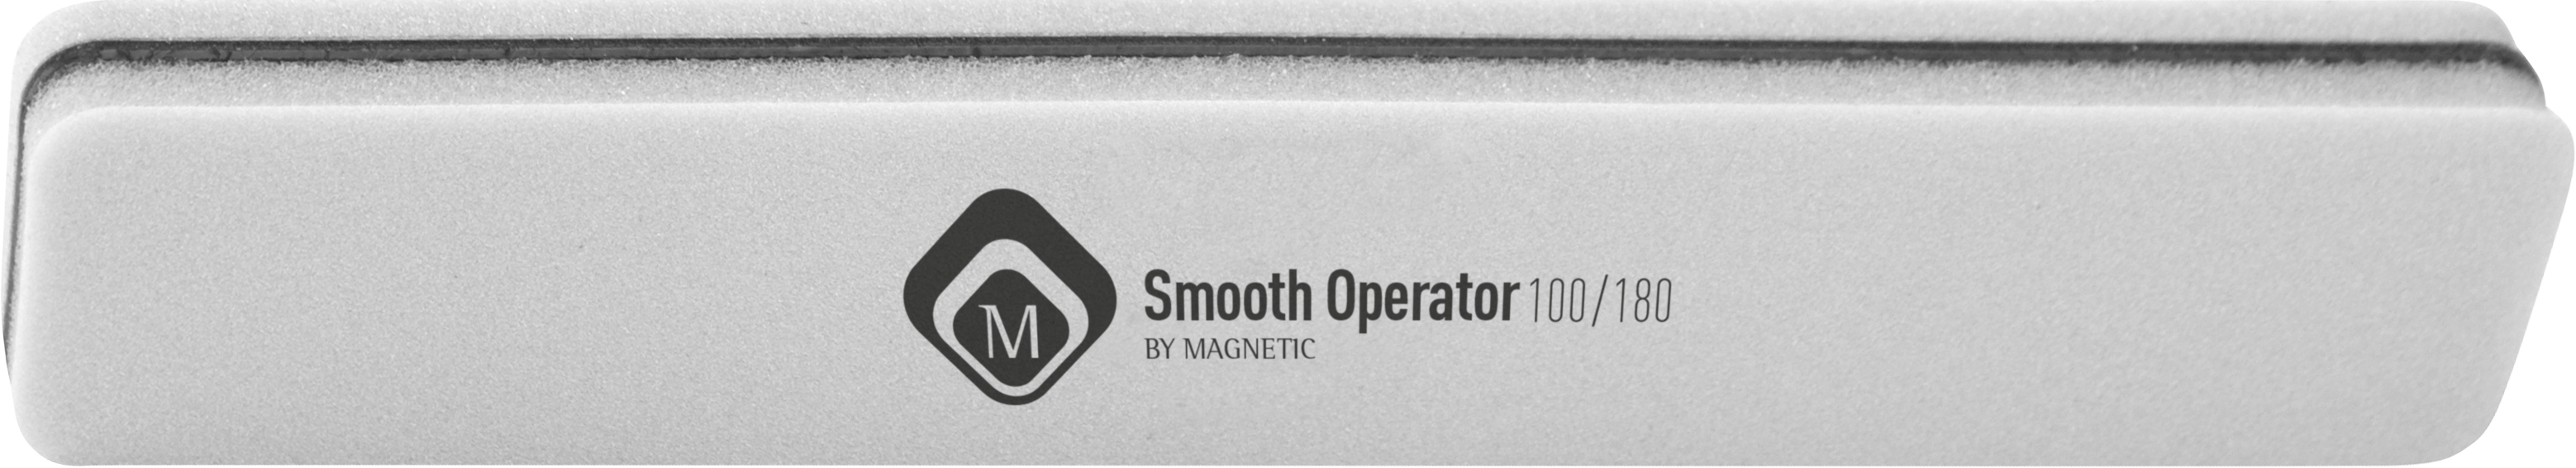 Smooth Operator Board 100/180 10 pcs